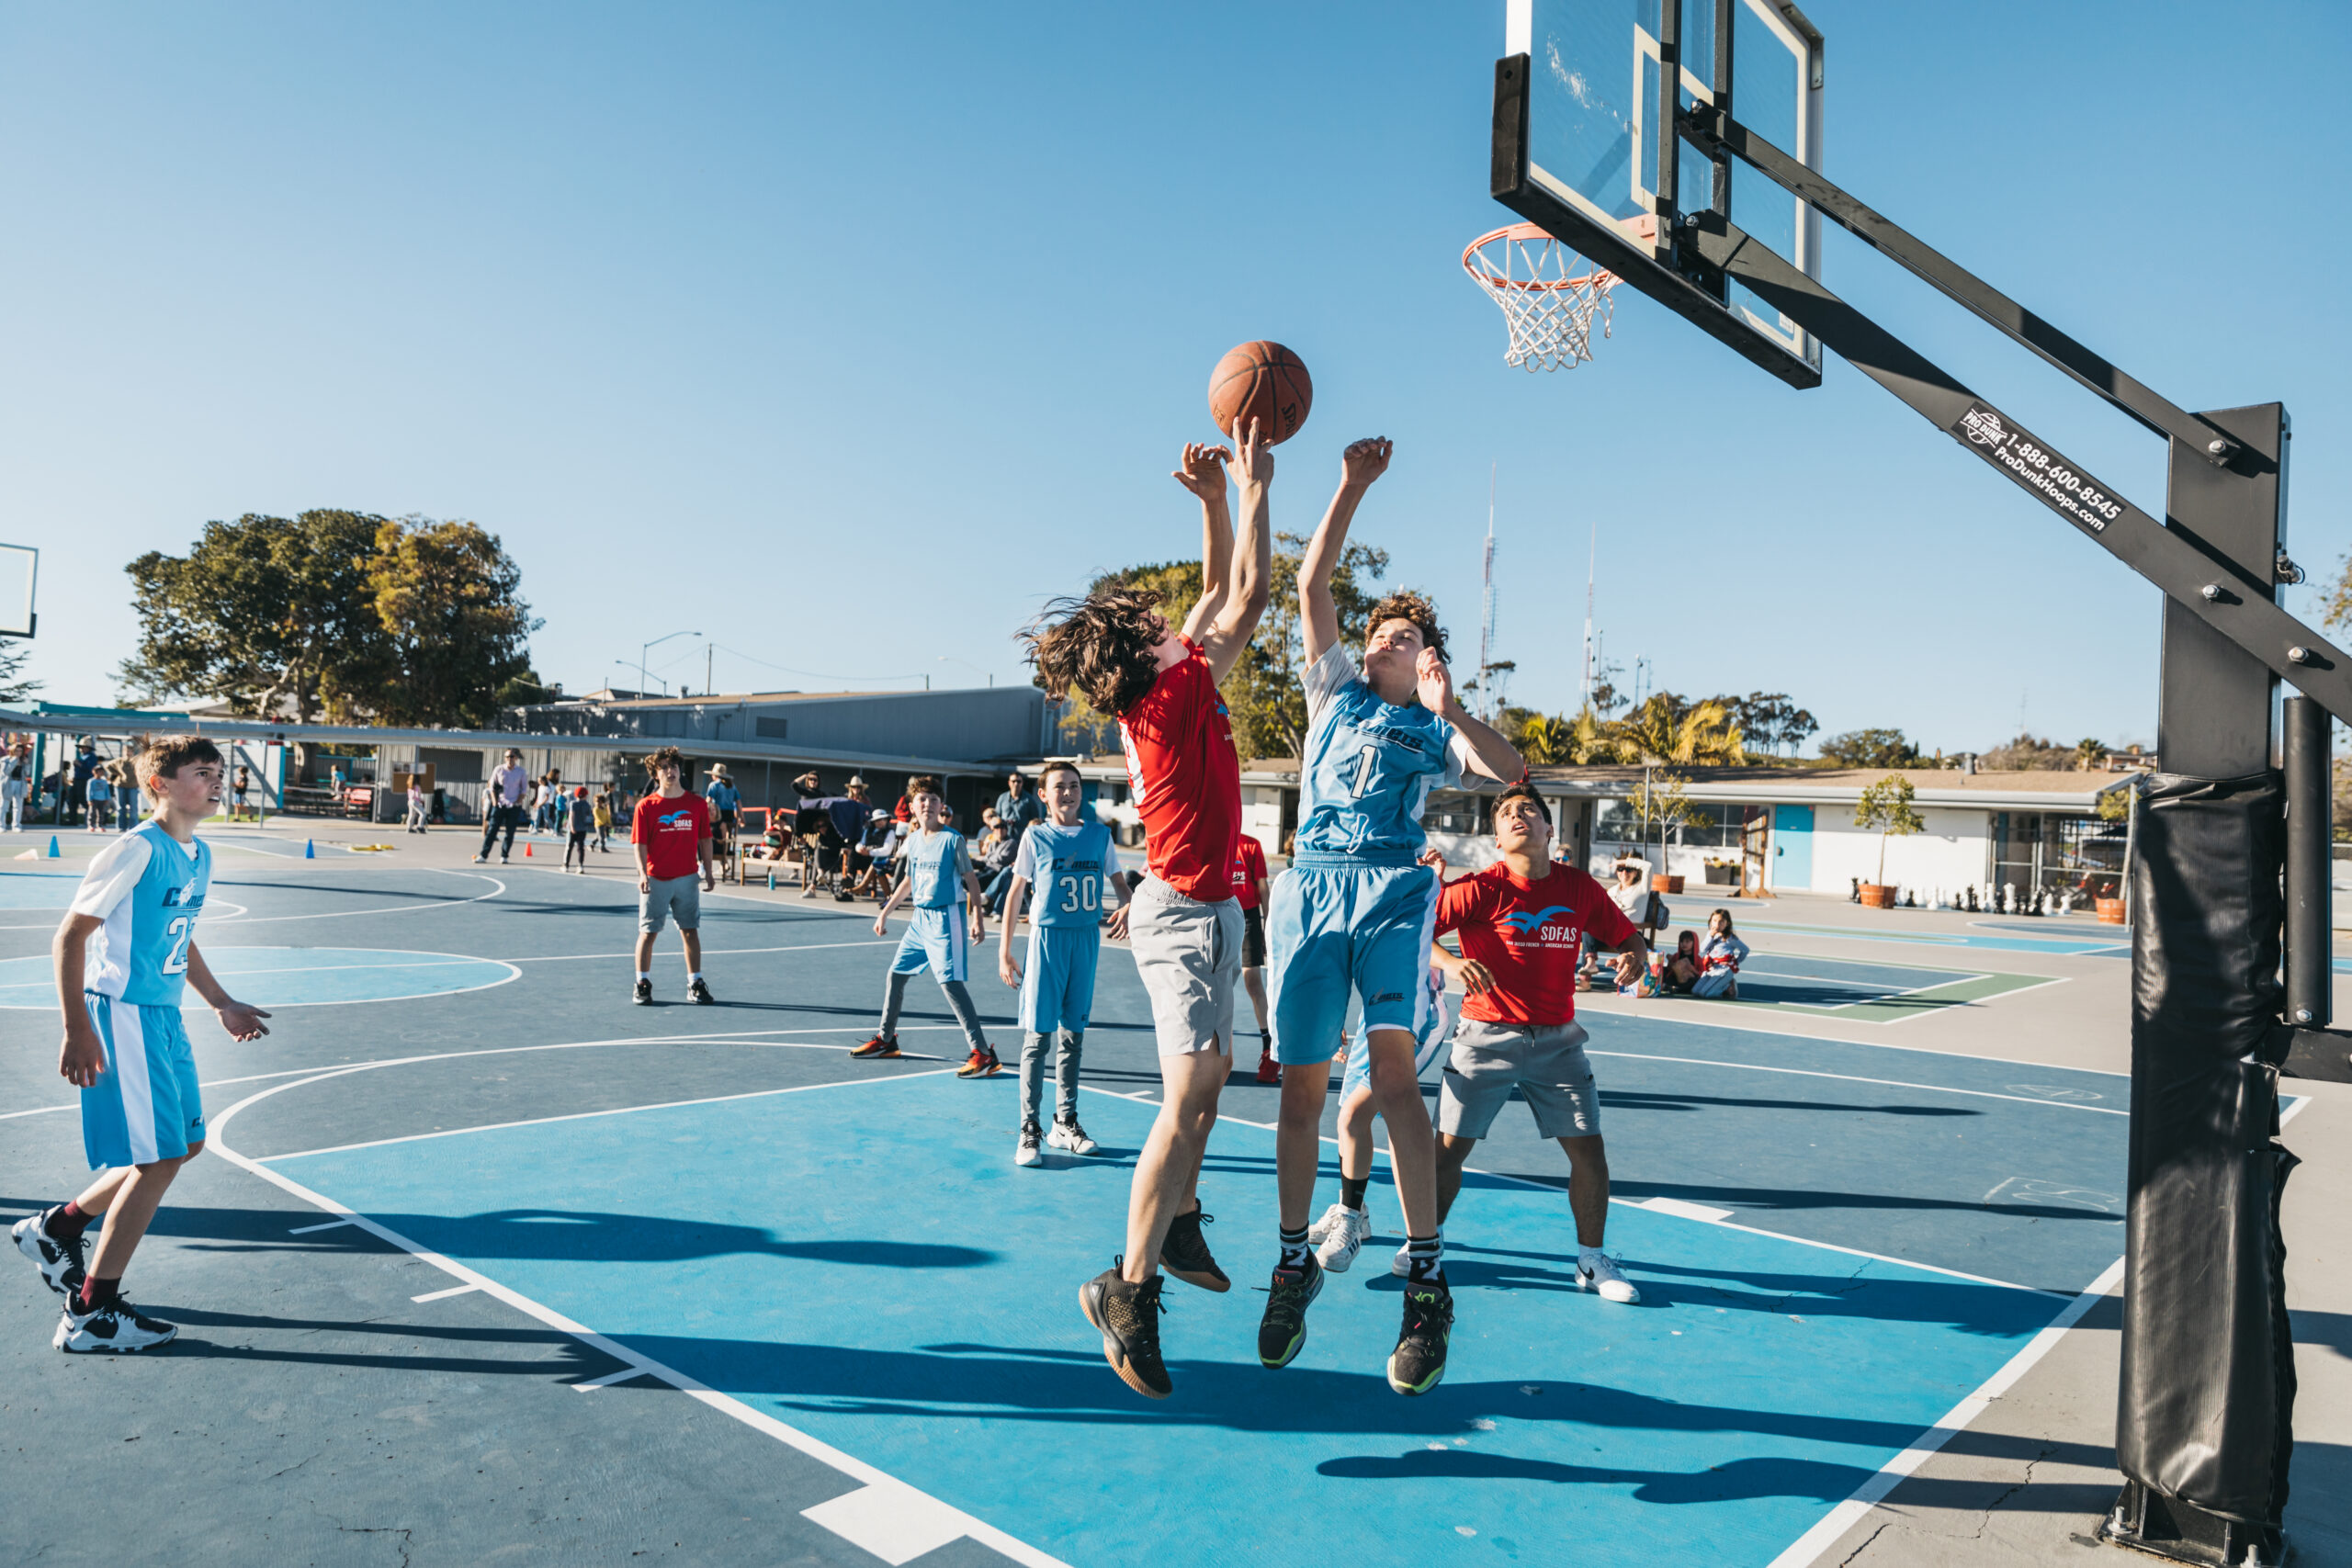 children on basketball court